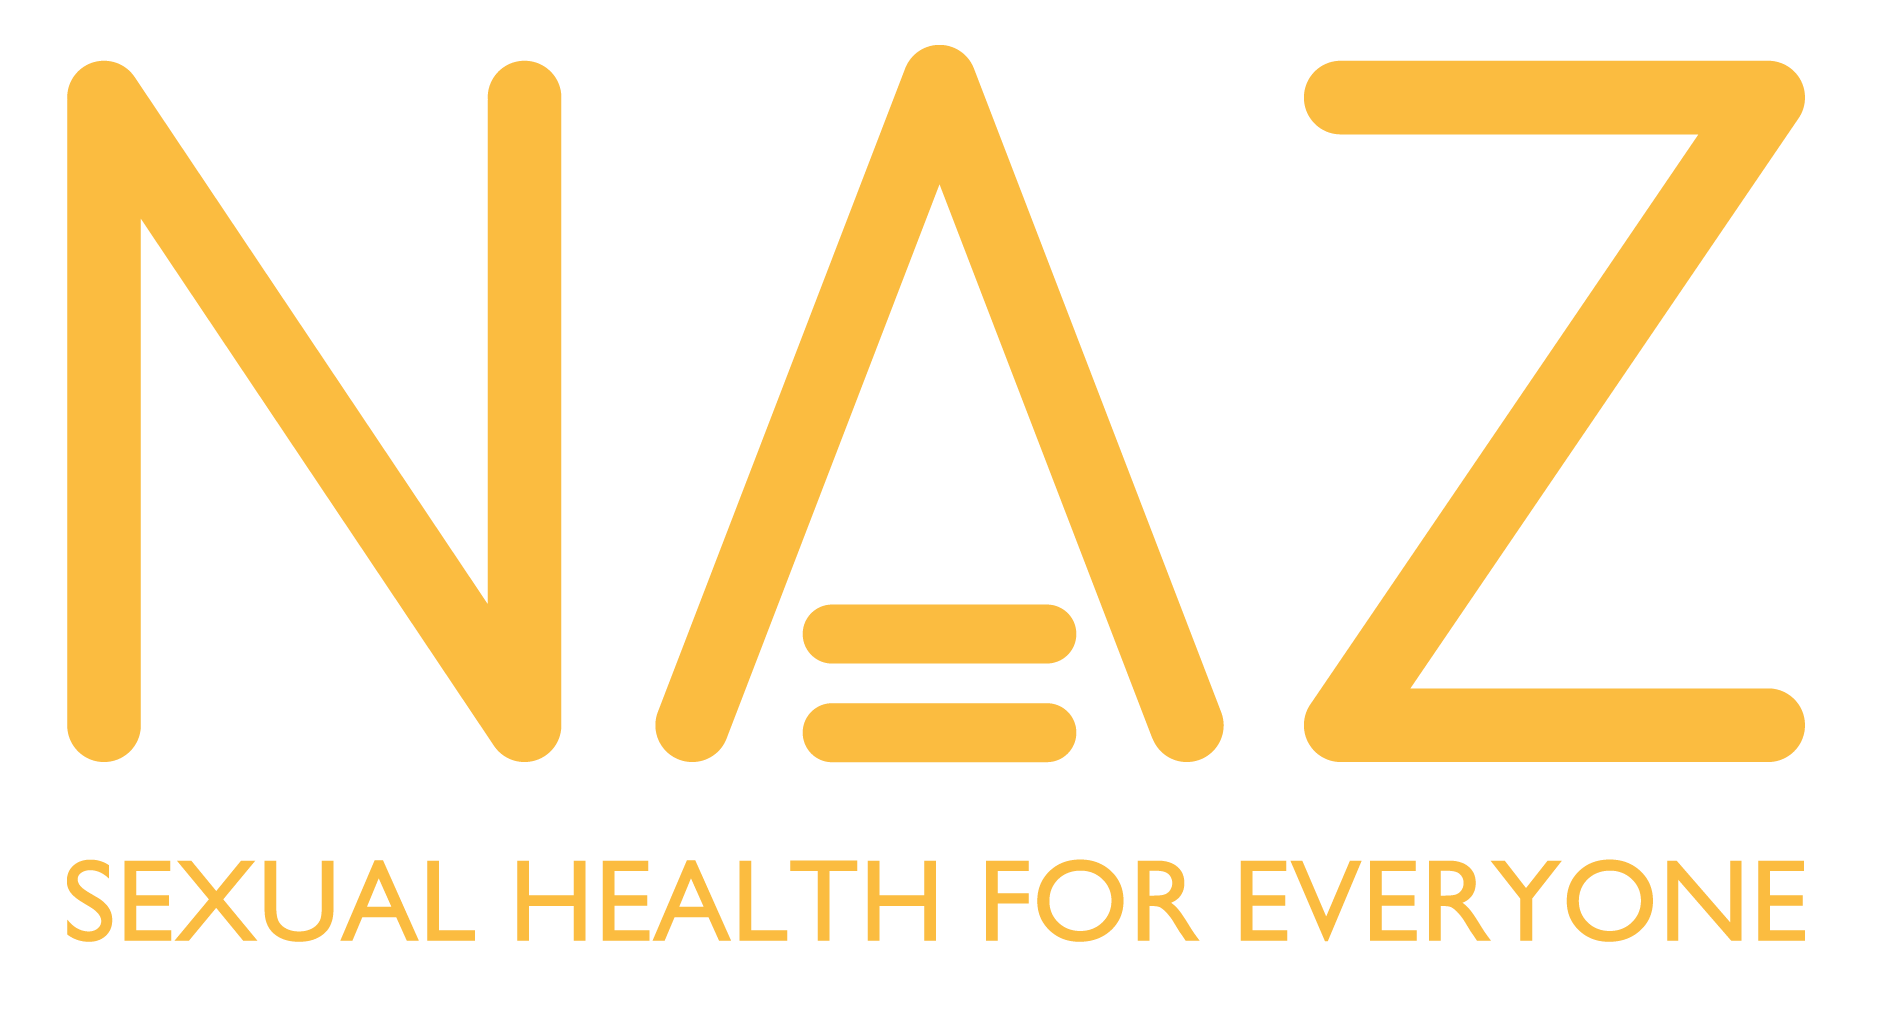 The Naz Project London